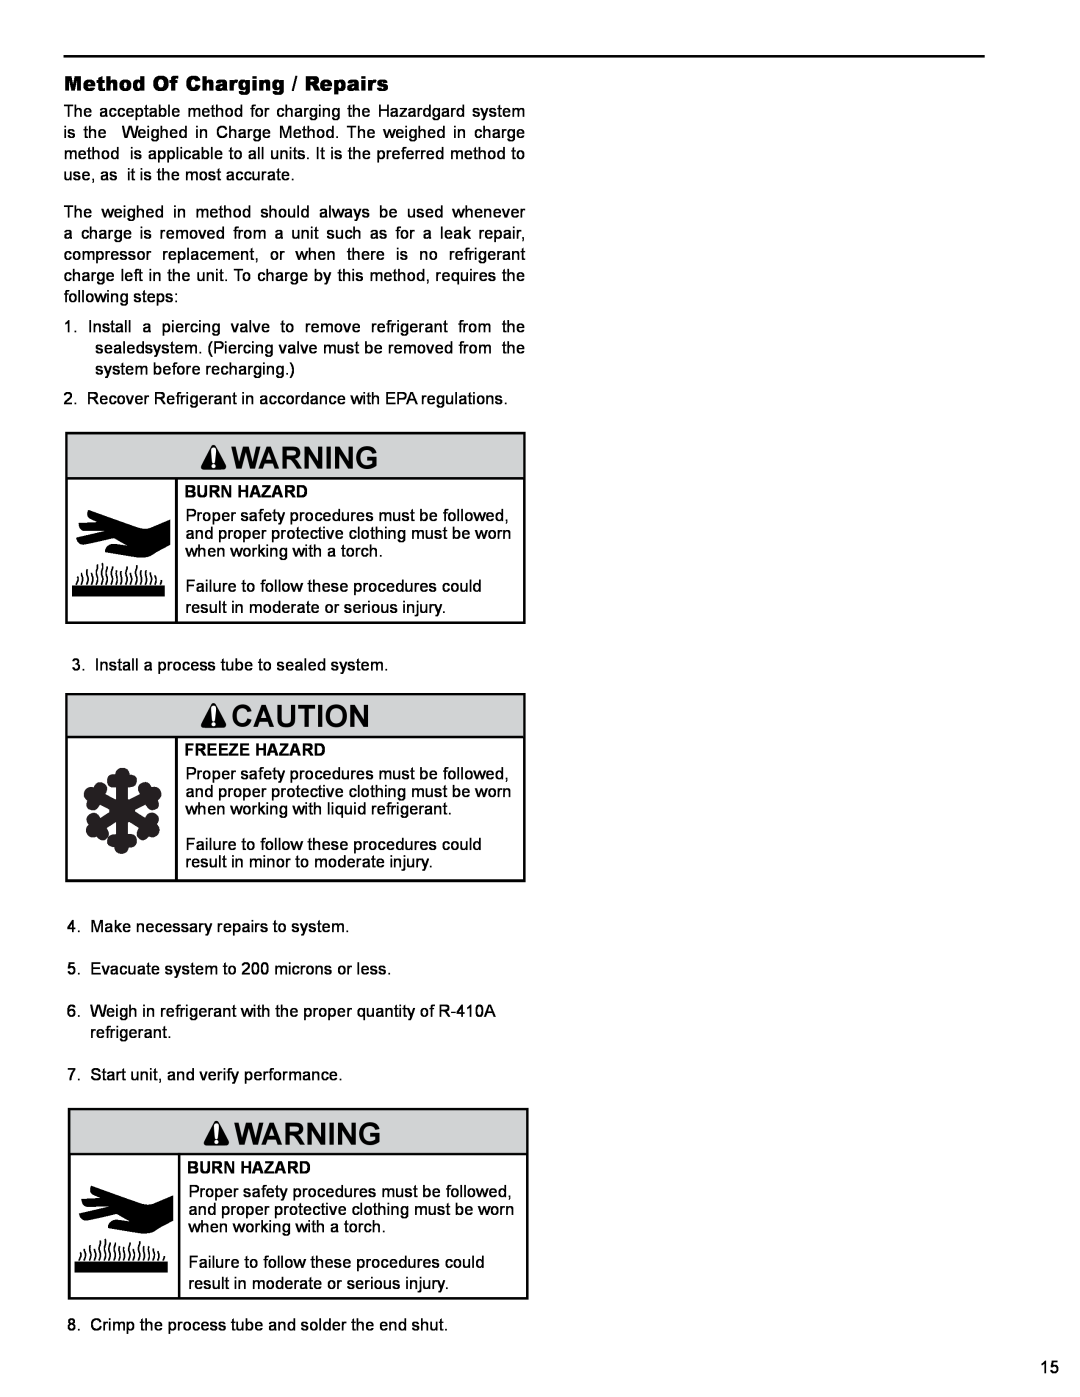 Friedrich R-410A service manual Method Of Charging / Repairs, Burn Hazard, Freeze Hazard 